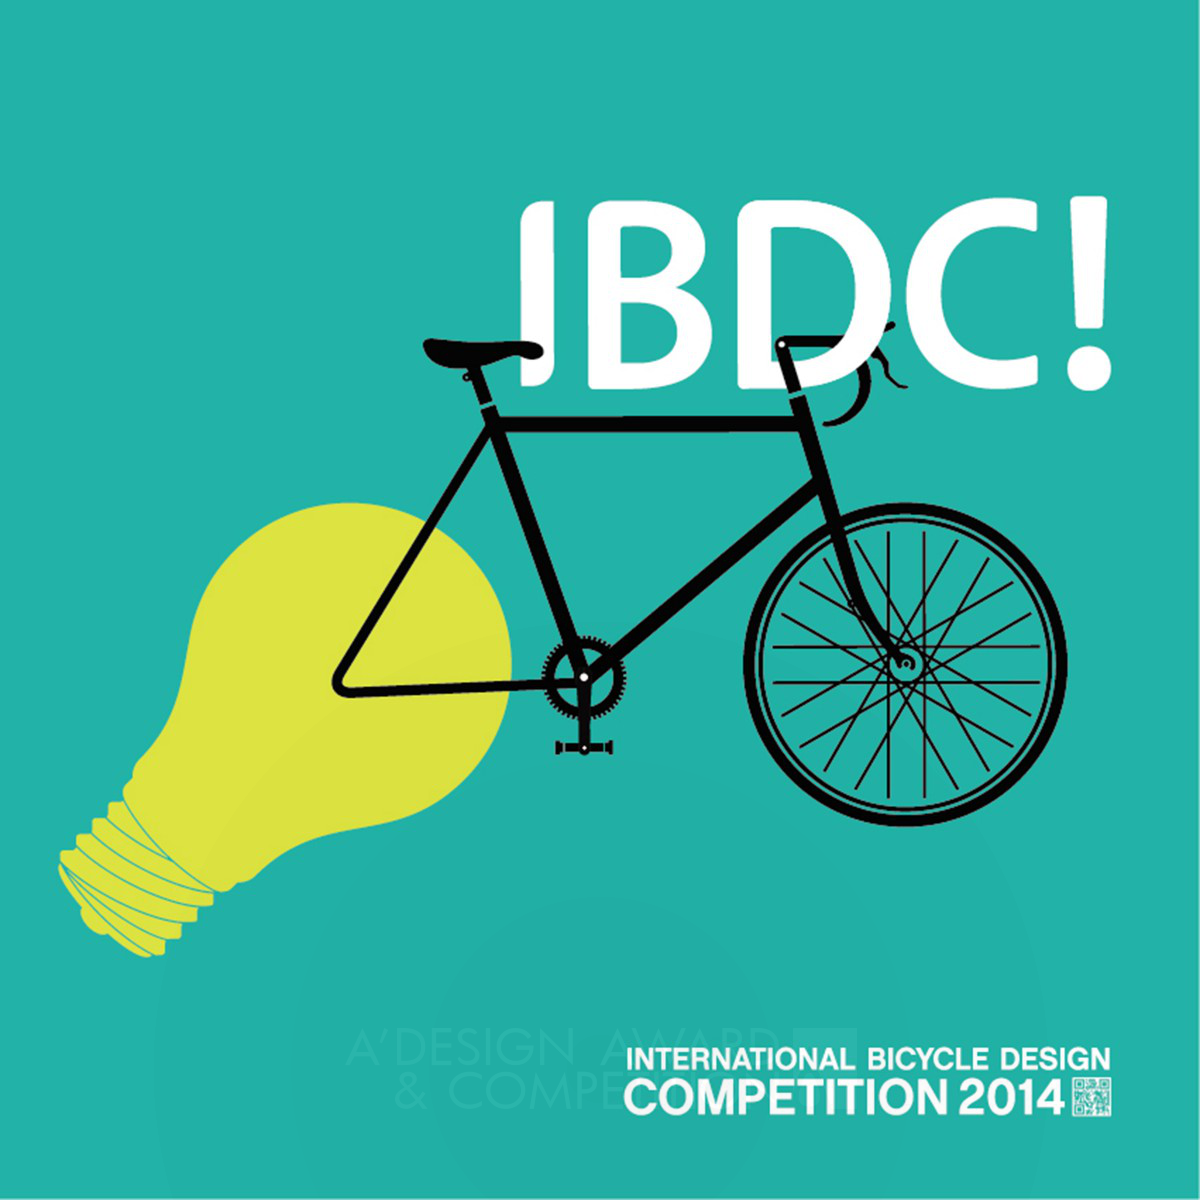 IBDC-2014 Promotional Images <b>Visual Identity